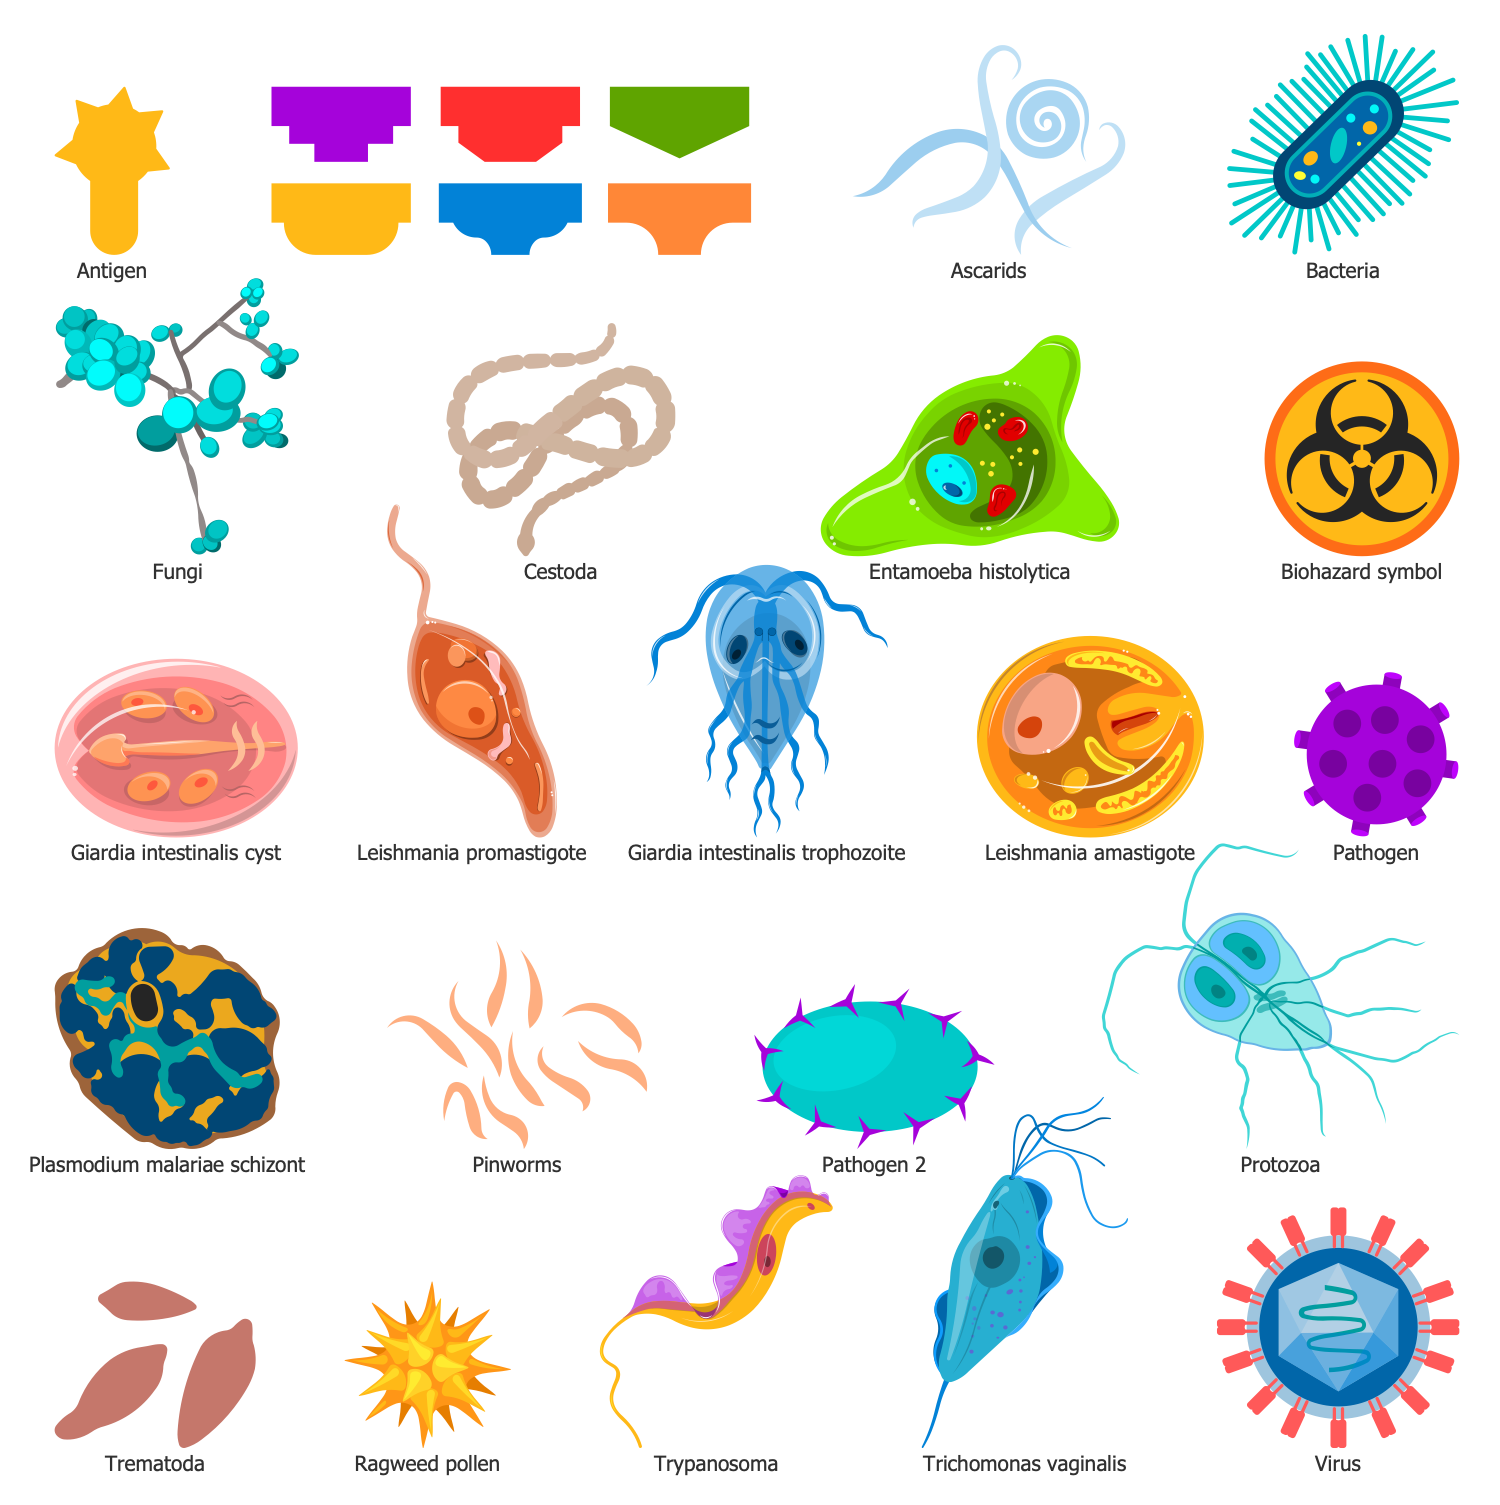 Antigens and Pathogens